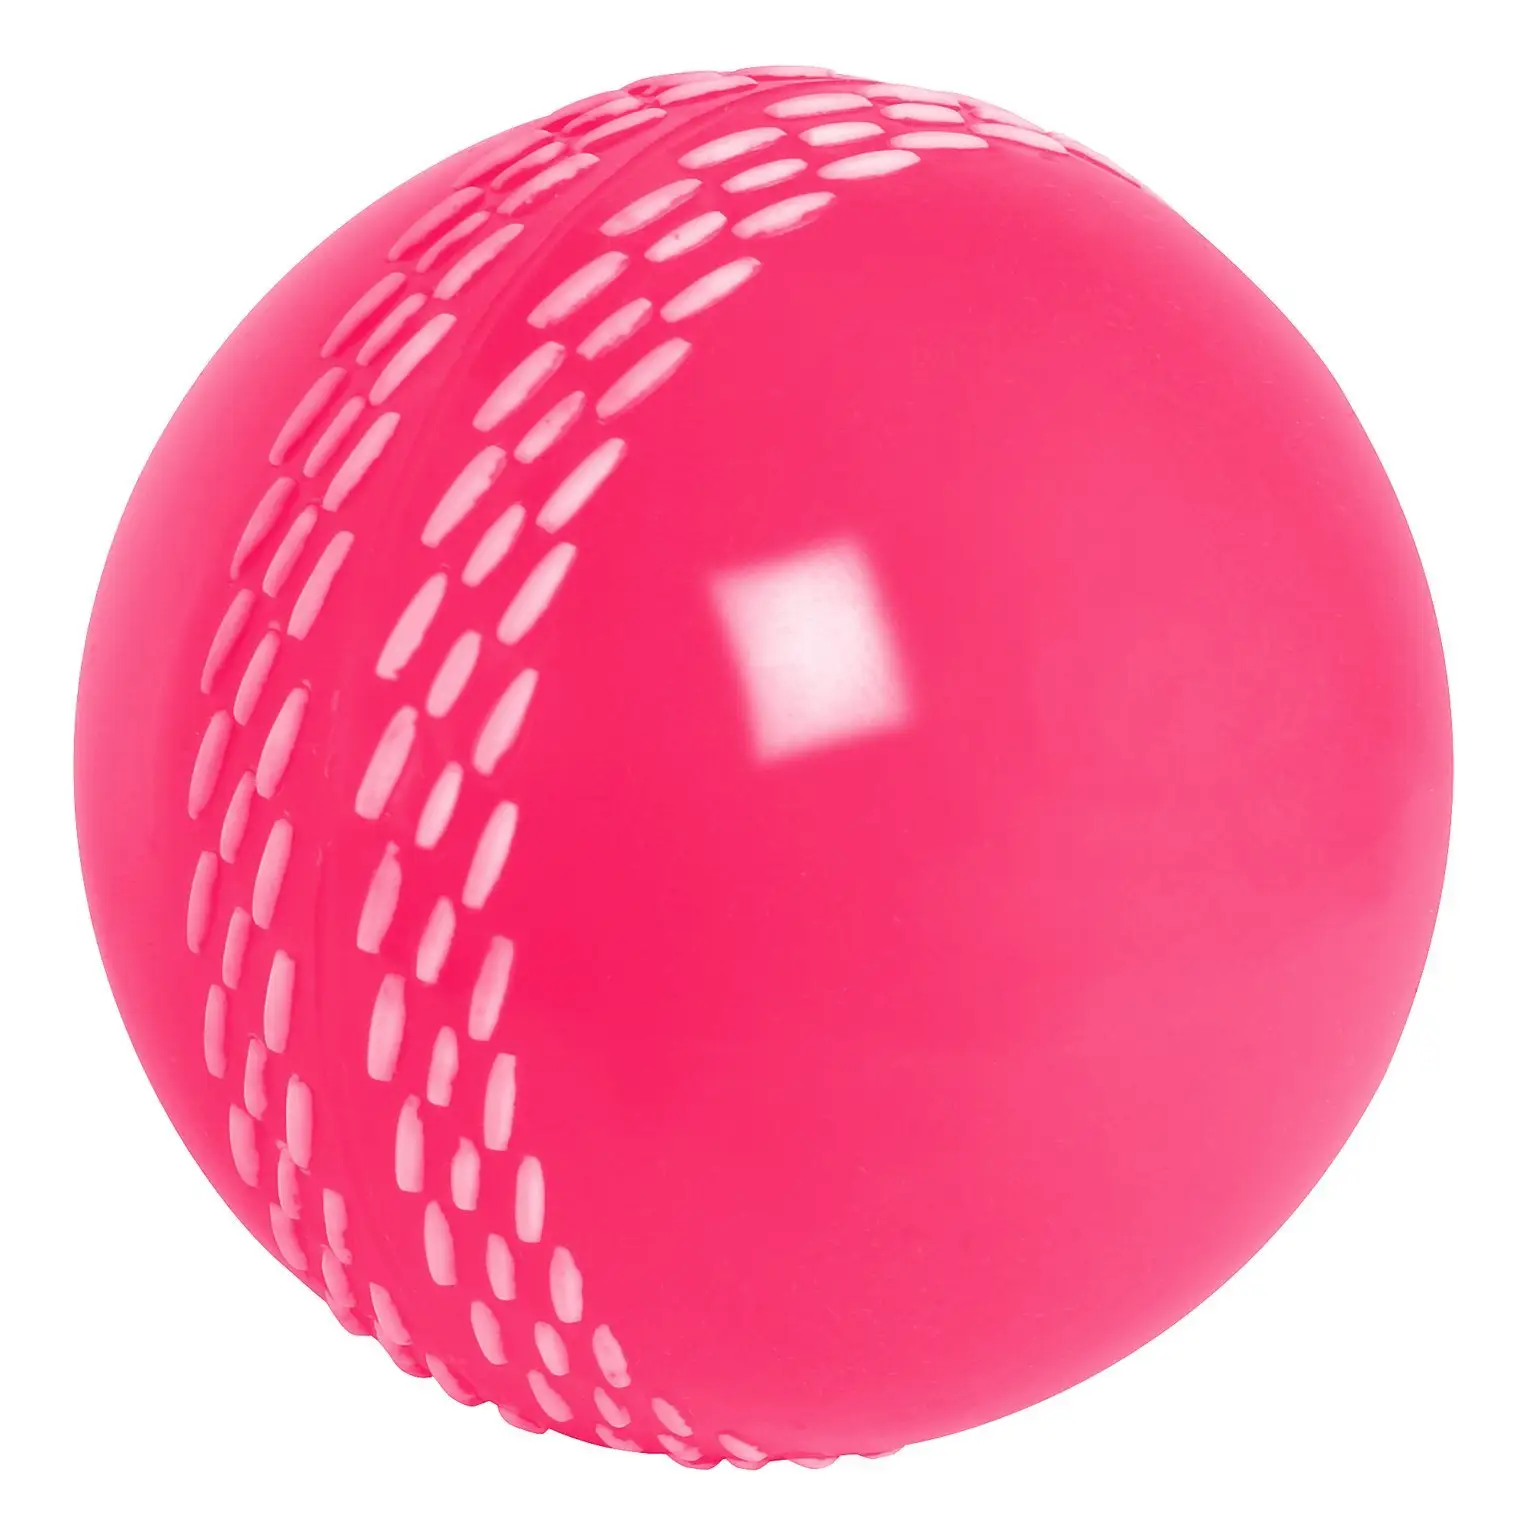 Velocity Cricket Ball Superb Training Device Soft Rubber Ball Gray Nicolls - Pink - BALL - TRAINING SENIOR